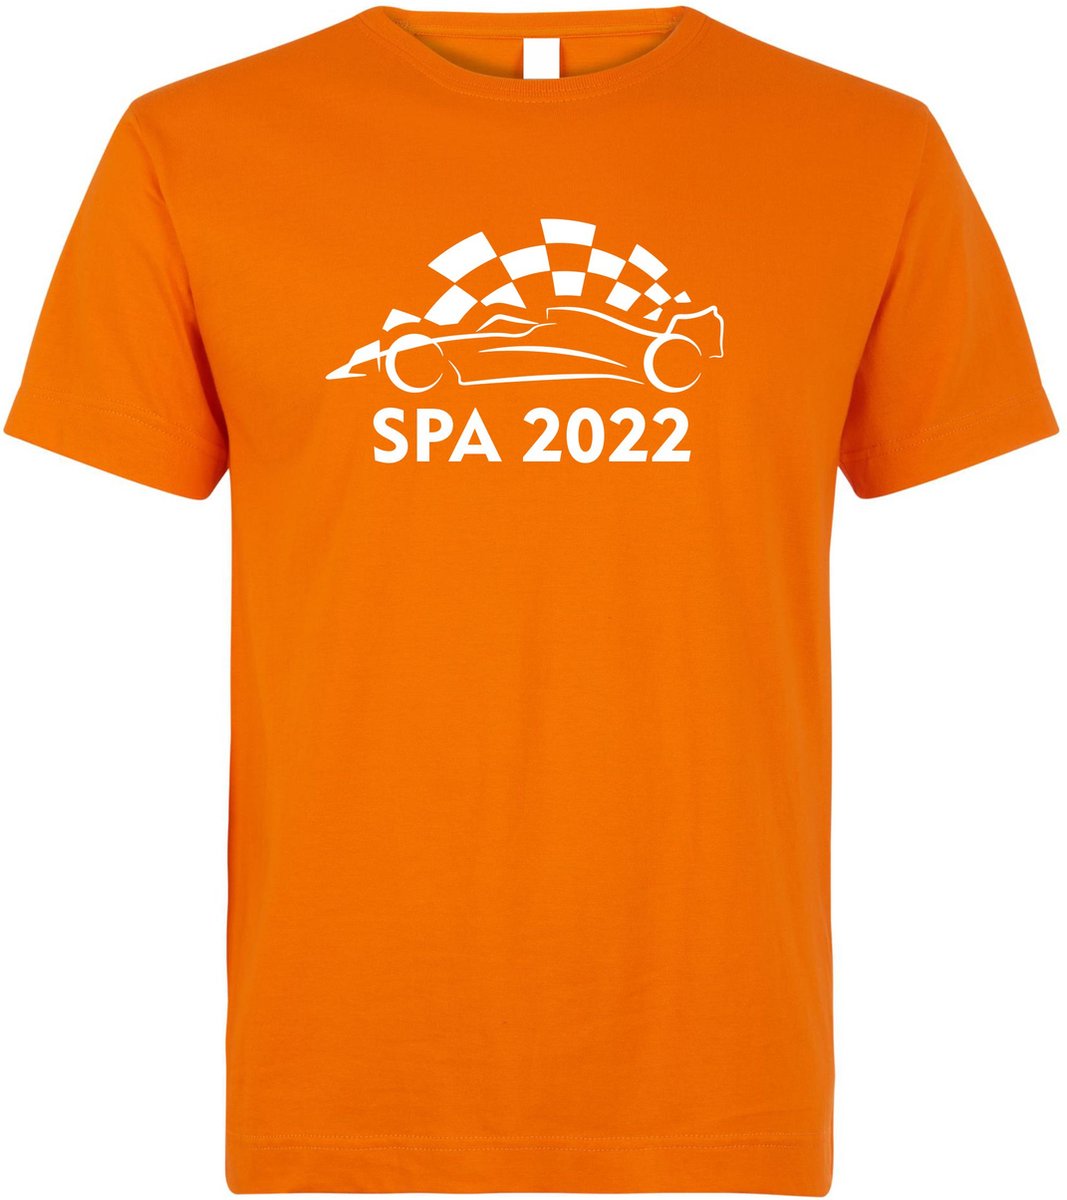 T-shirt Spa 2022 met raceauto | Max Verstappen / Red Bull Racing / Formule 1 fan | Grand Prix Circuit Spa-Francorchamps | kleding shirt | Oranje | maat 3XL